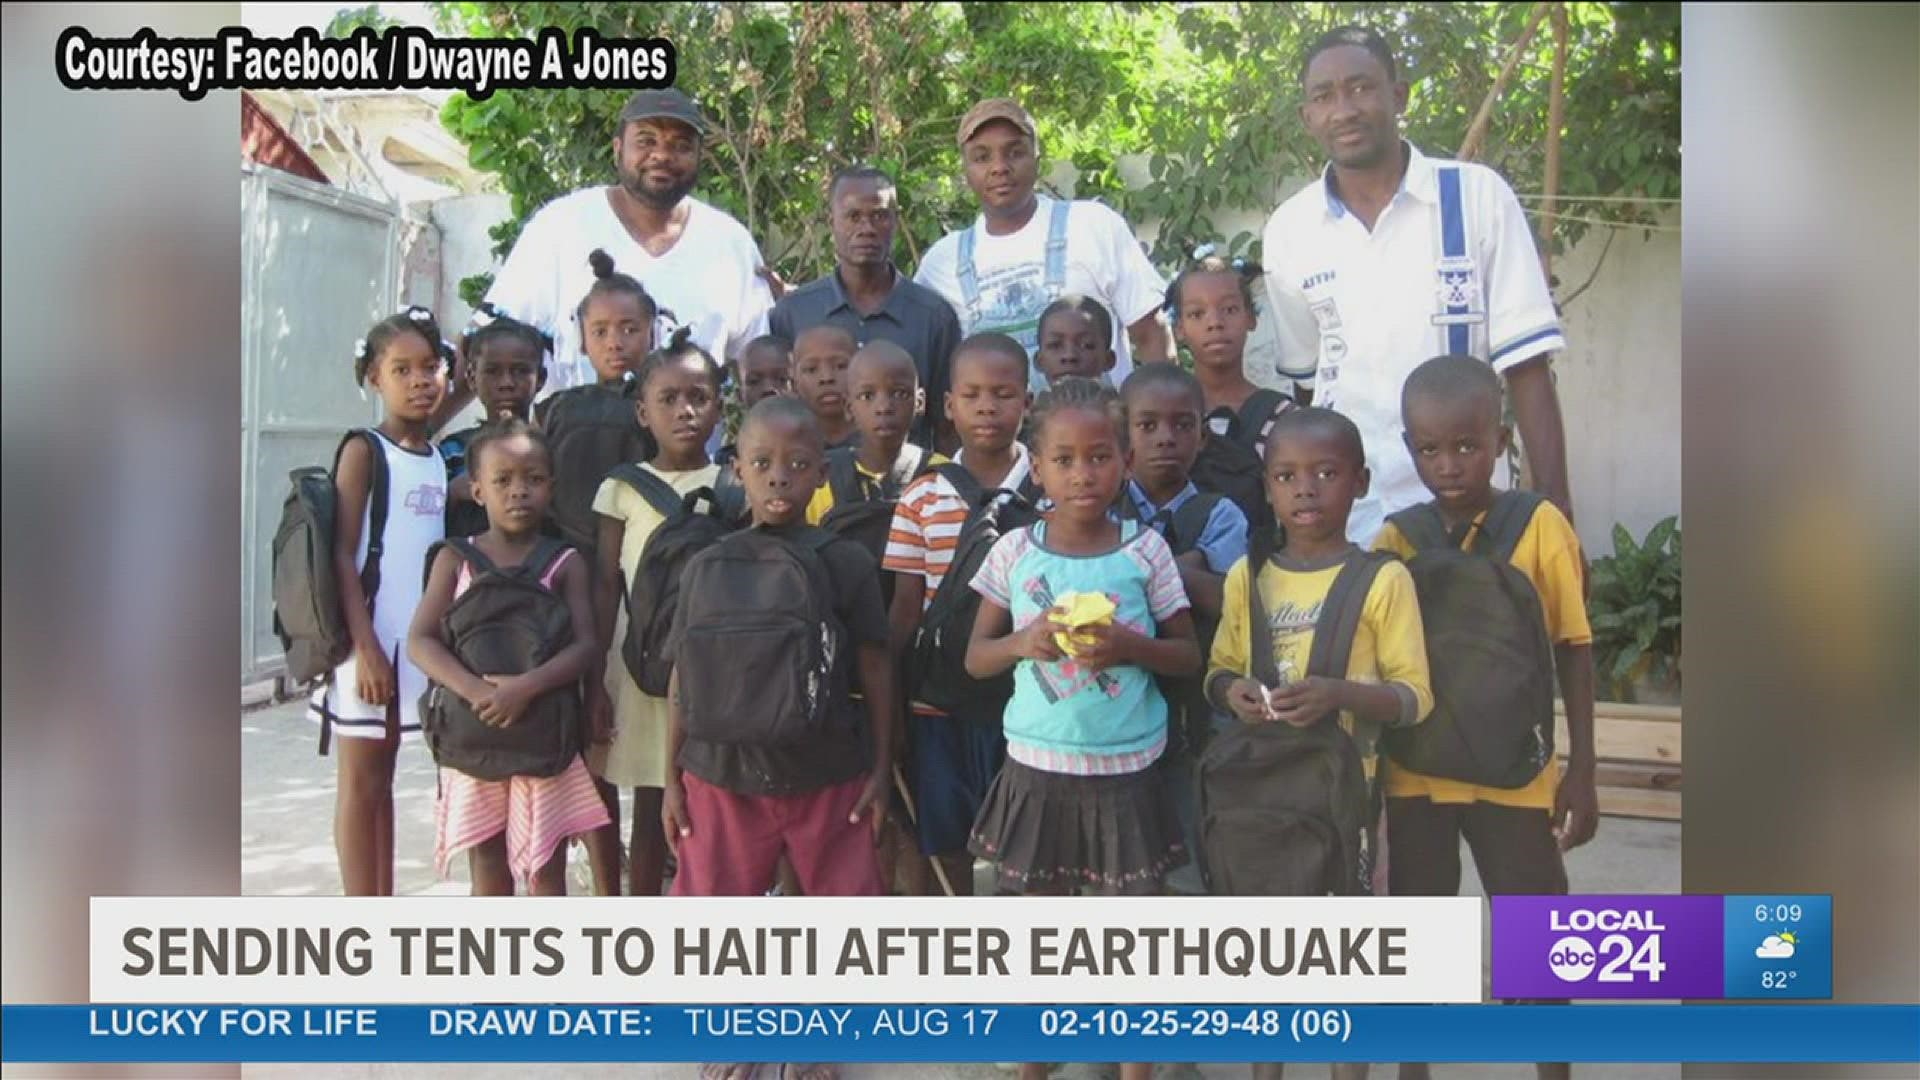 Dwayne Jones needs 100 tents to set up a tent village in Haiti.